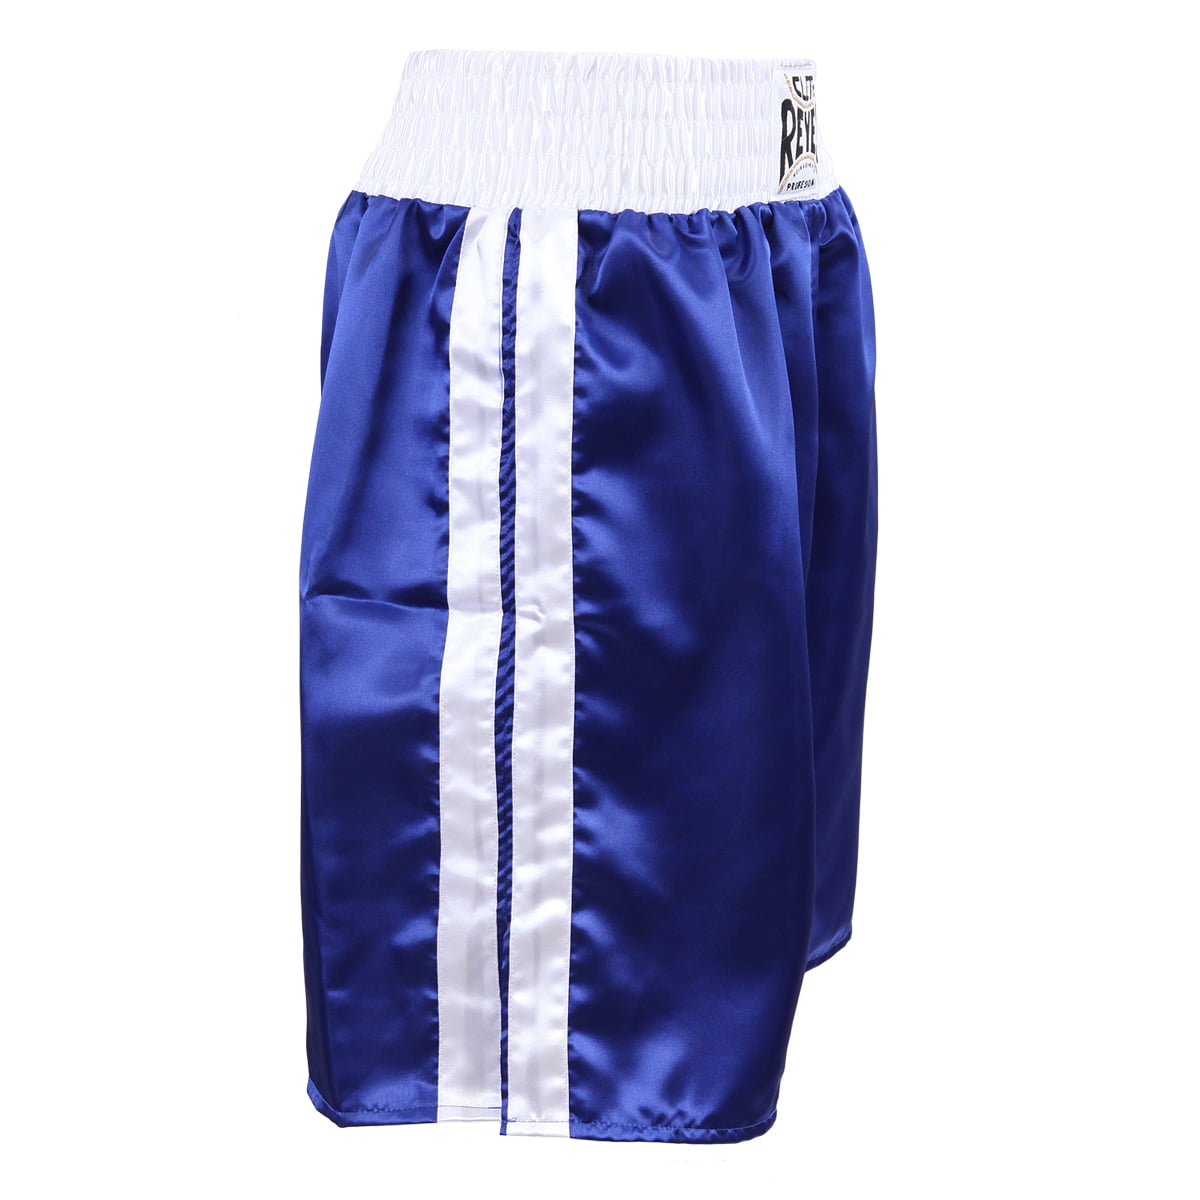 Cleto Reyes Satin Classic Boxing Trunks Blue 